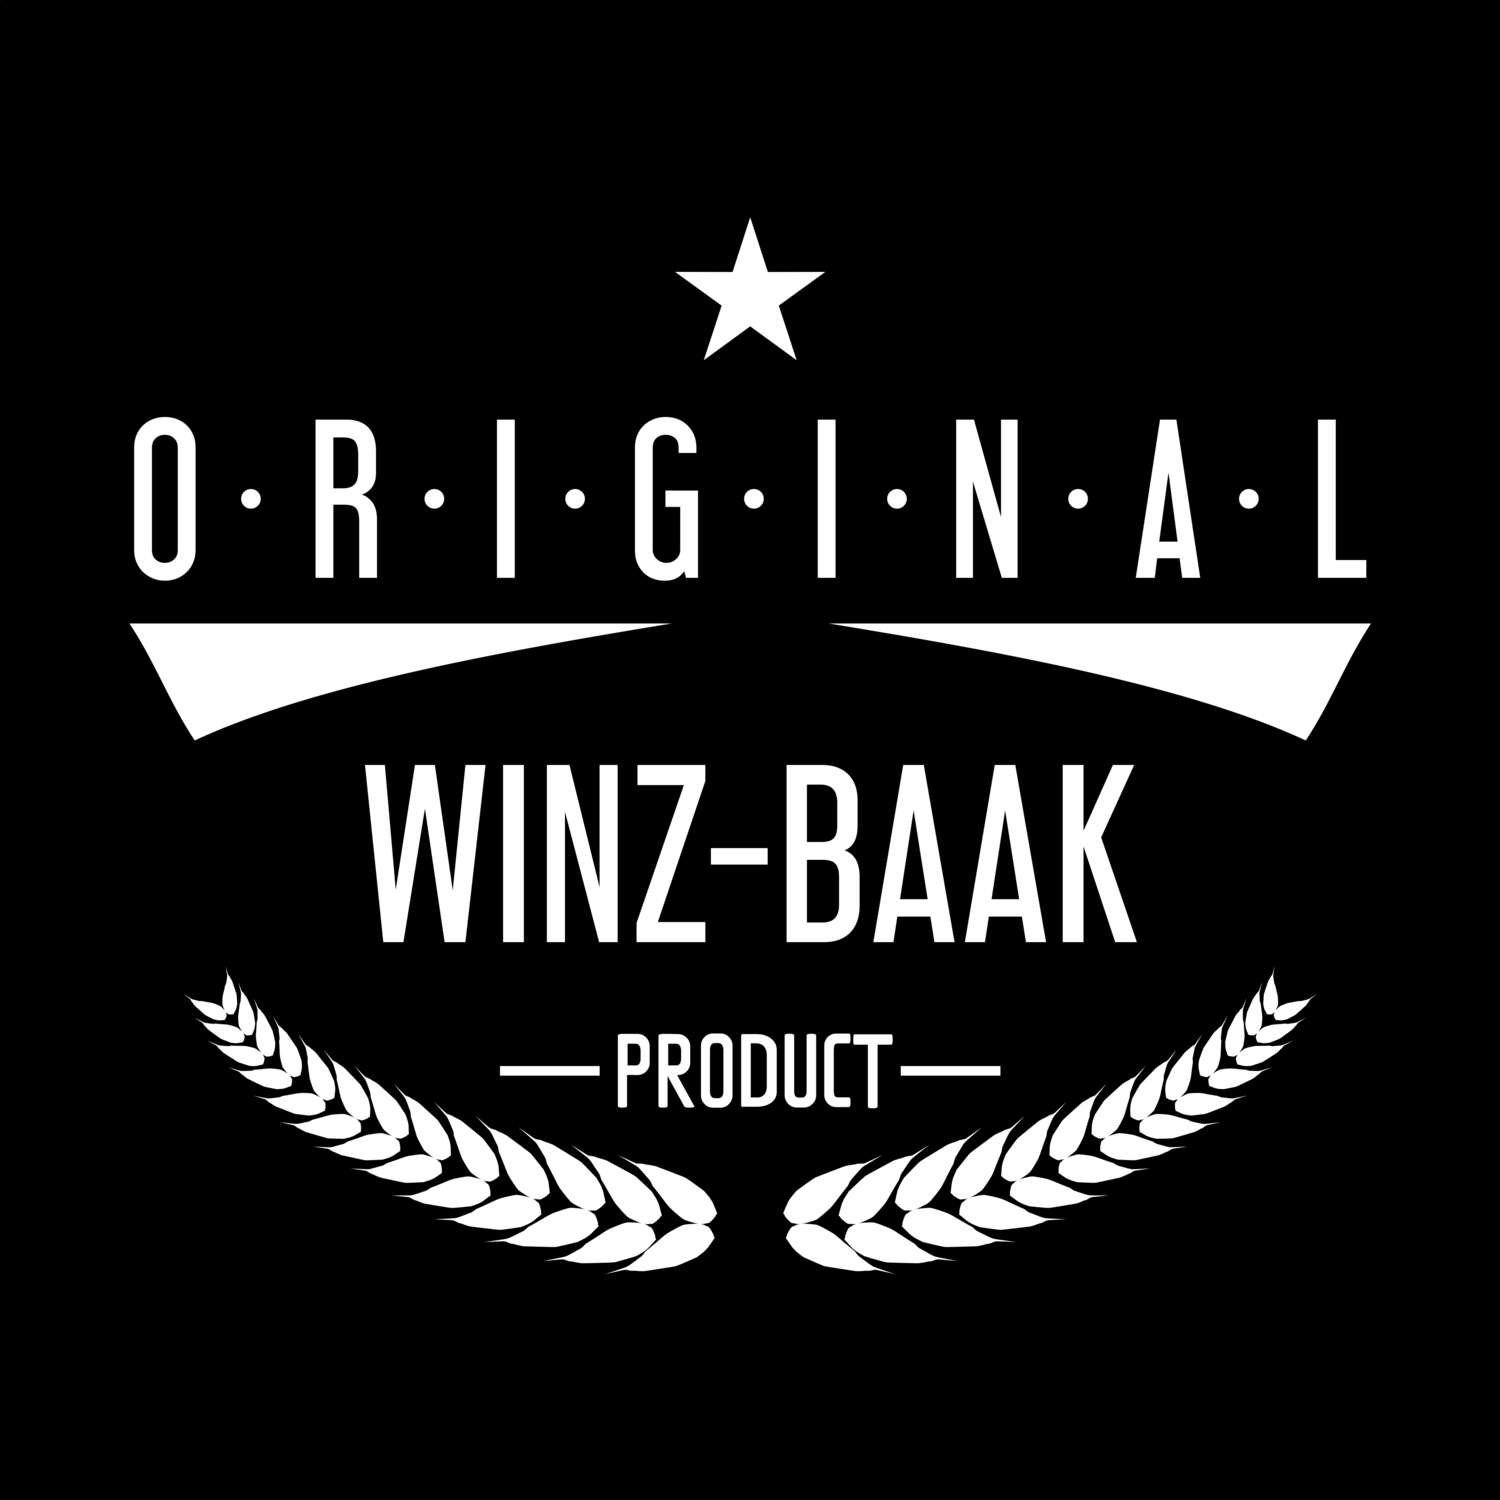 Winz-Baak T-Shirt »Original Product«